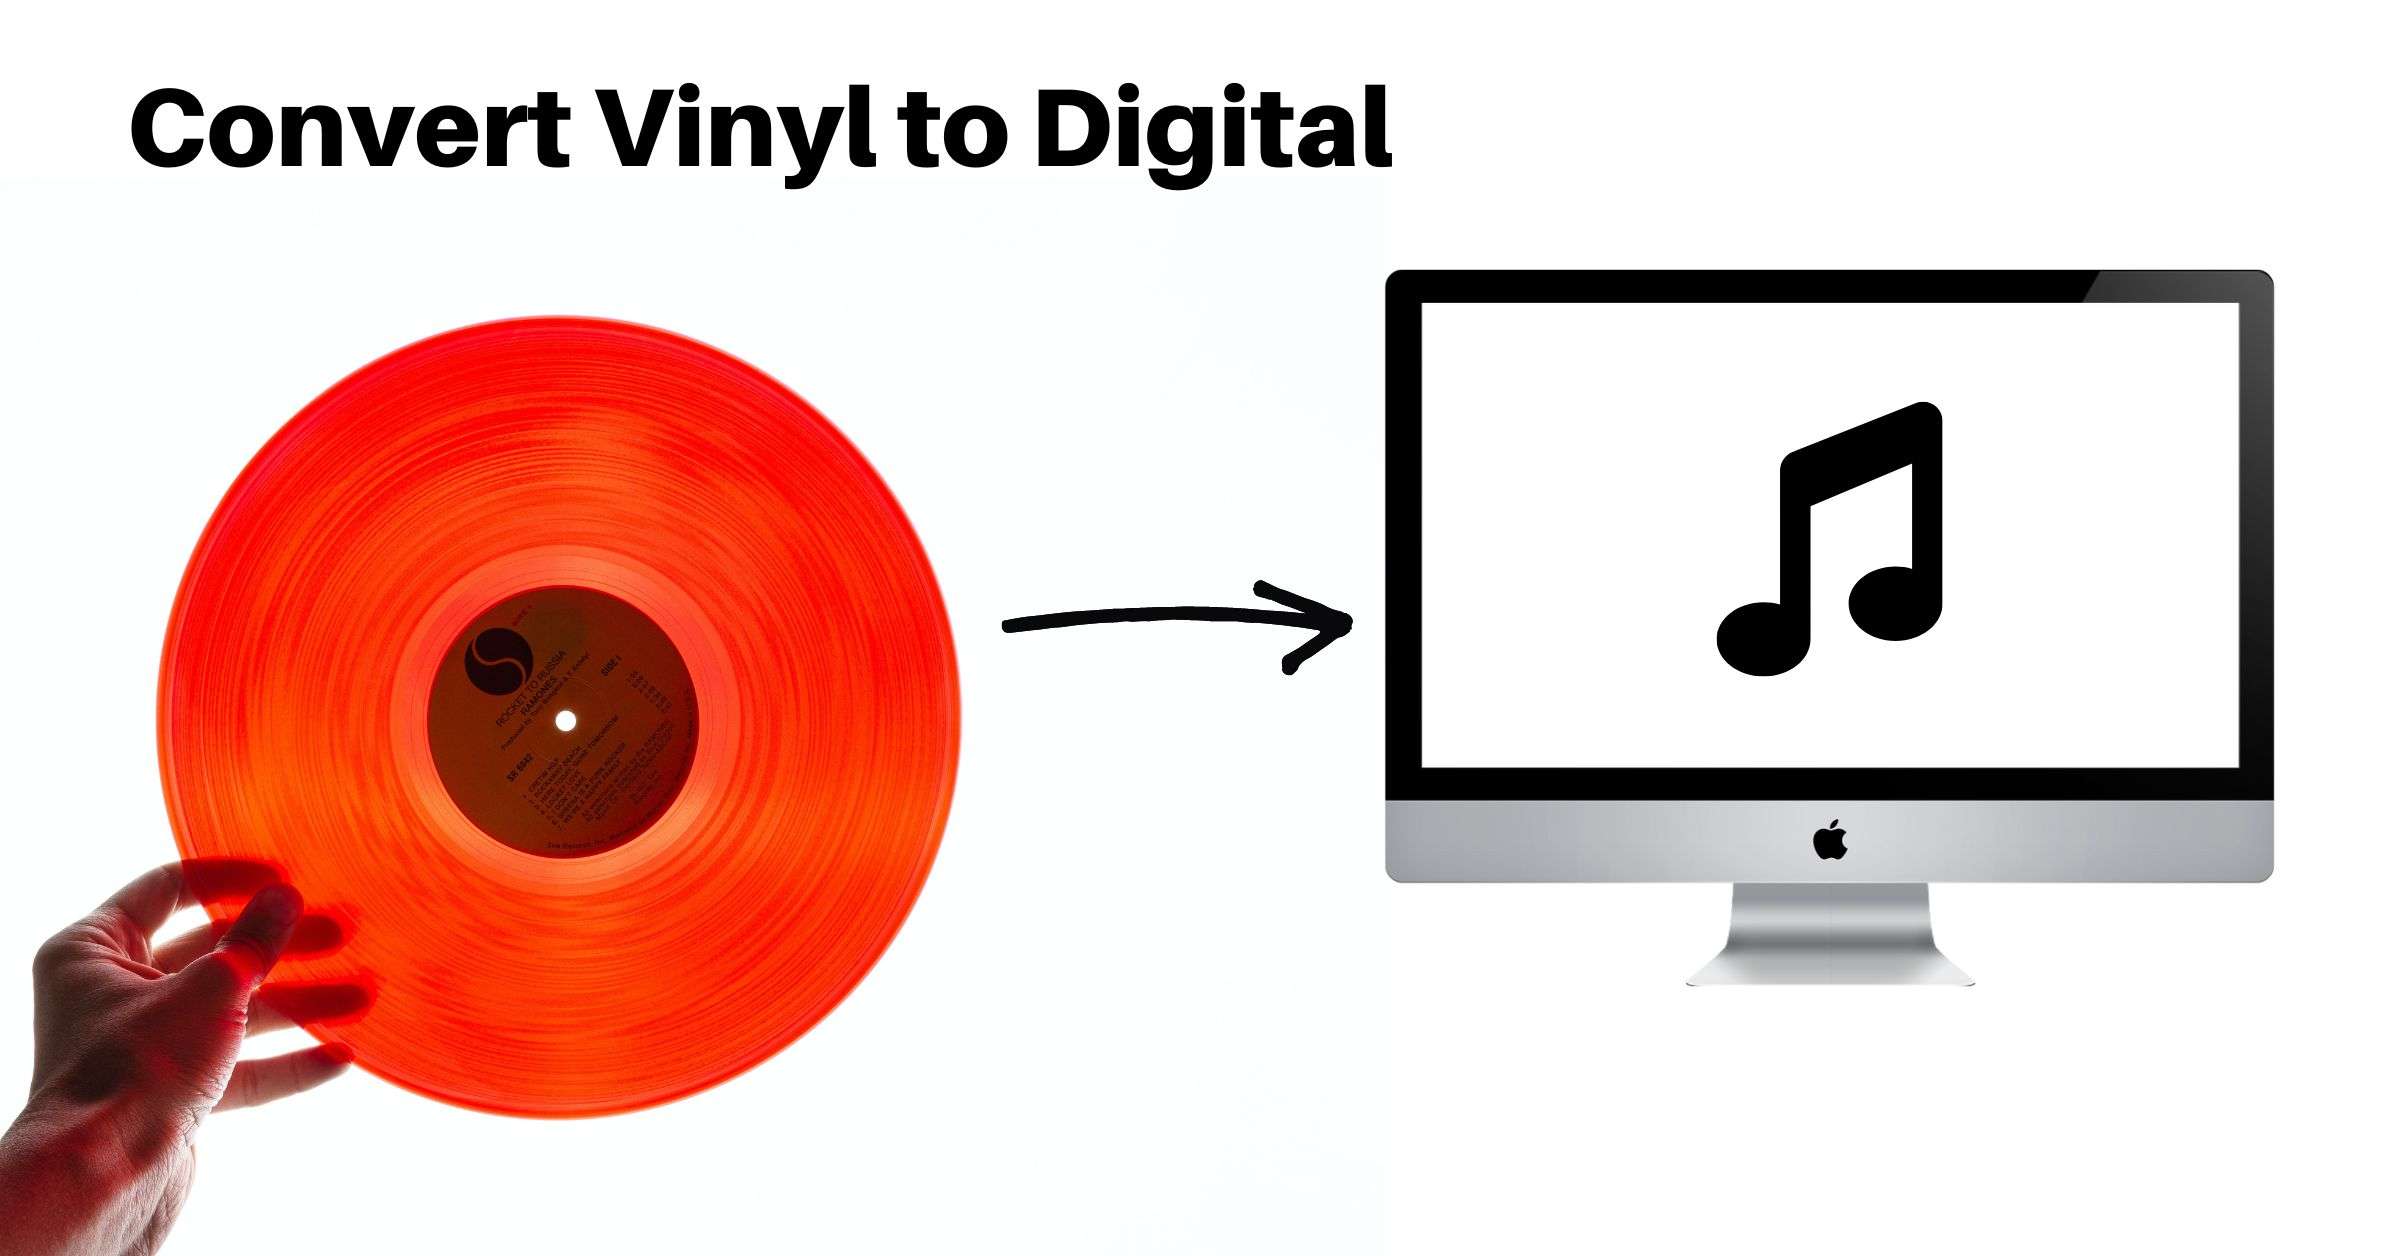 Convert vinyl to digital